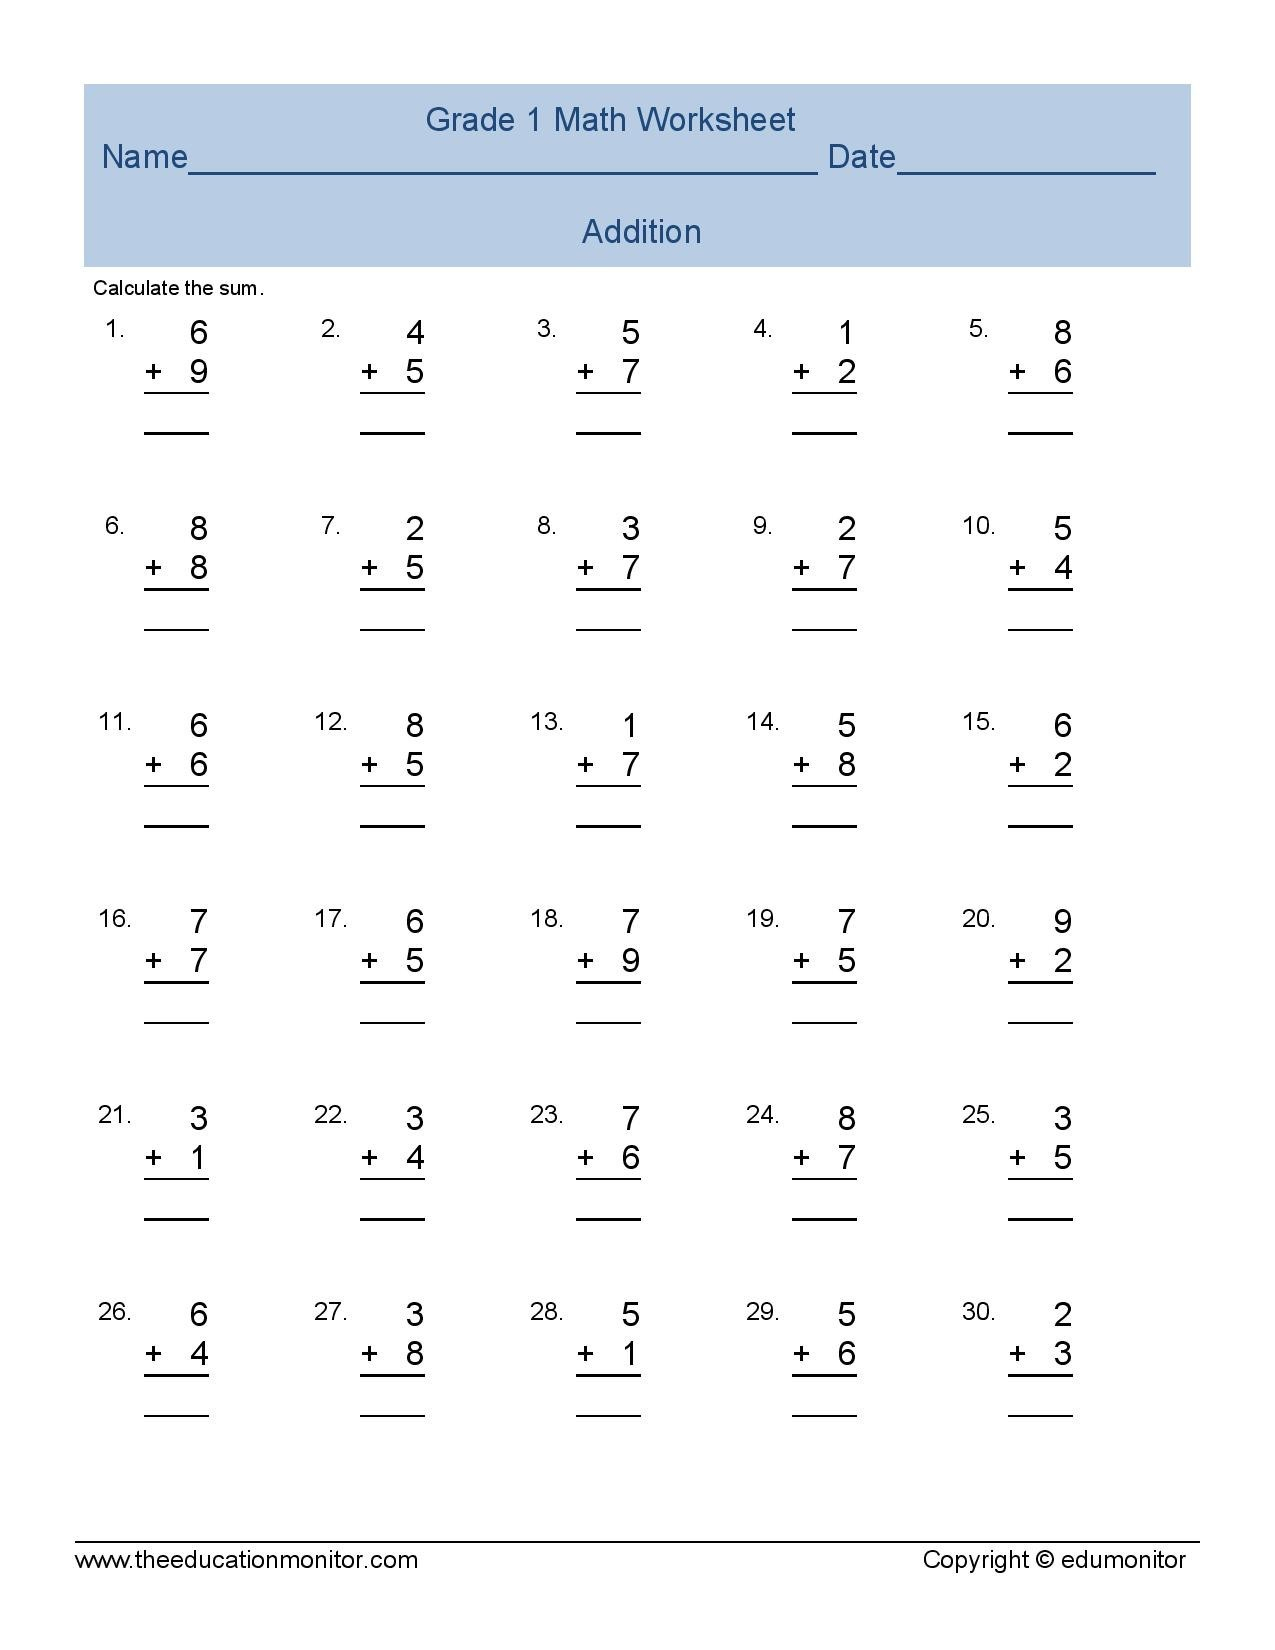 Free Printable Addition Worksheets For 1St Grade Math Worksheets 1St - Free Printable Addition Worksheets For 1St Grade